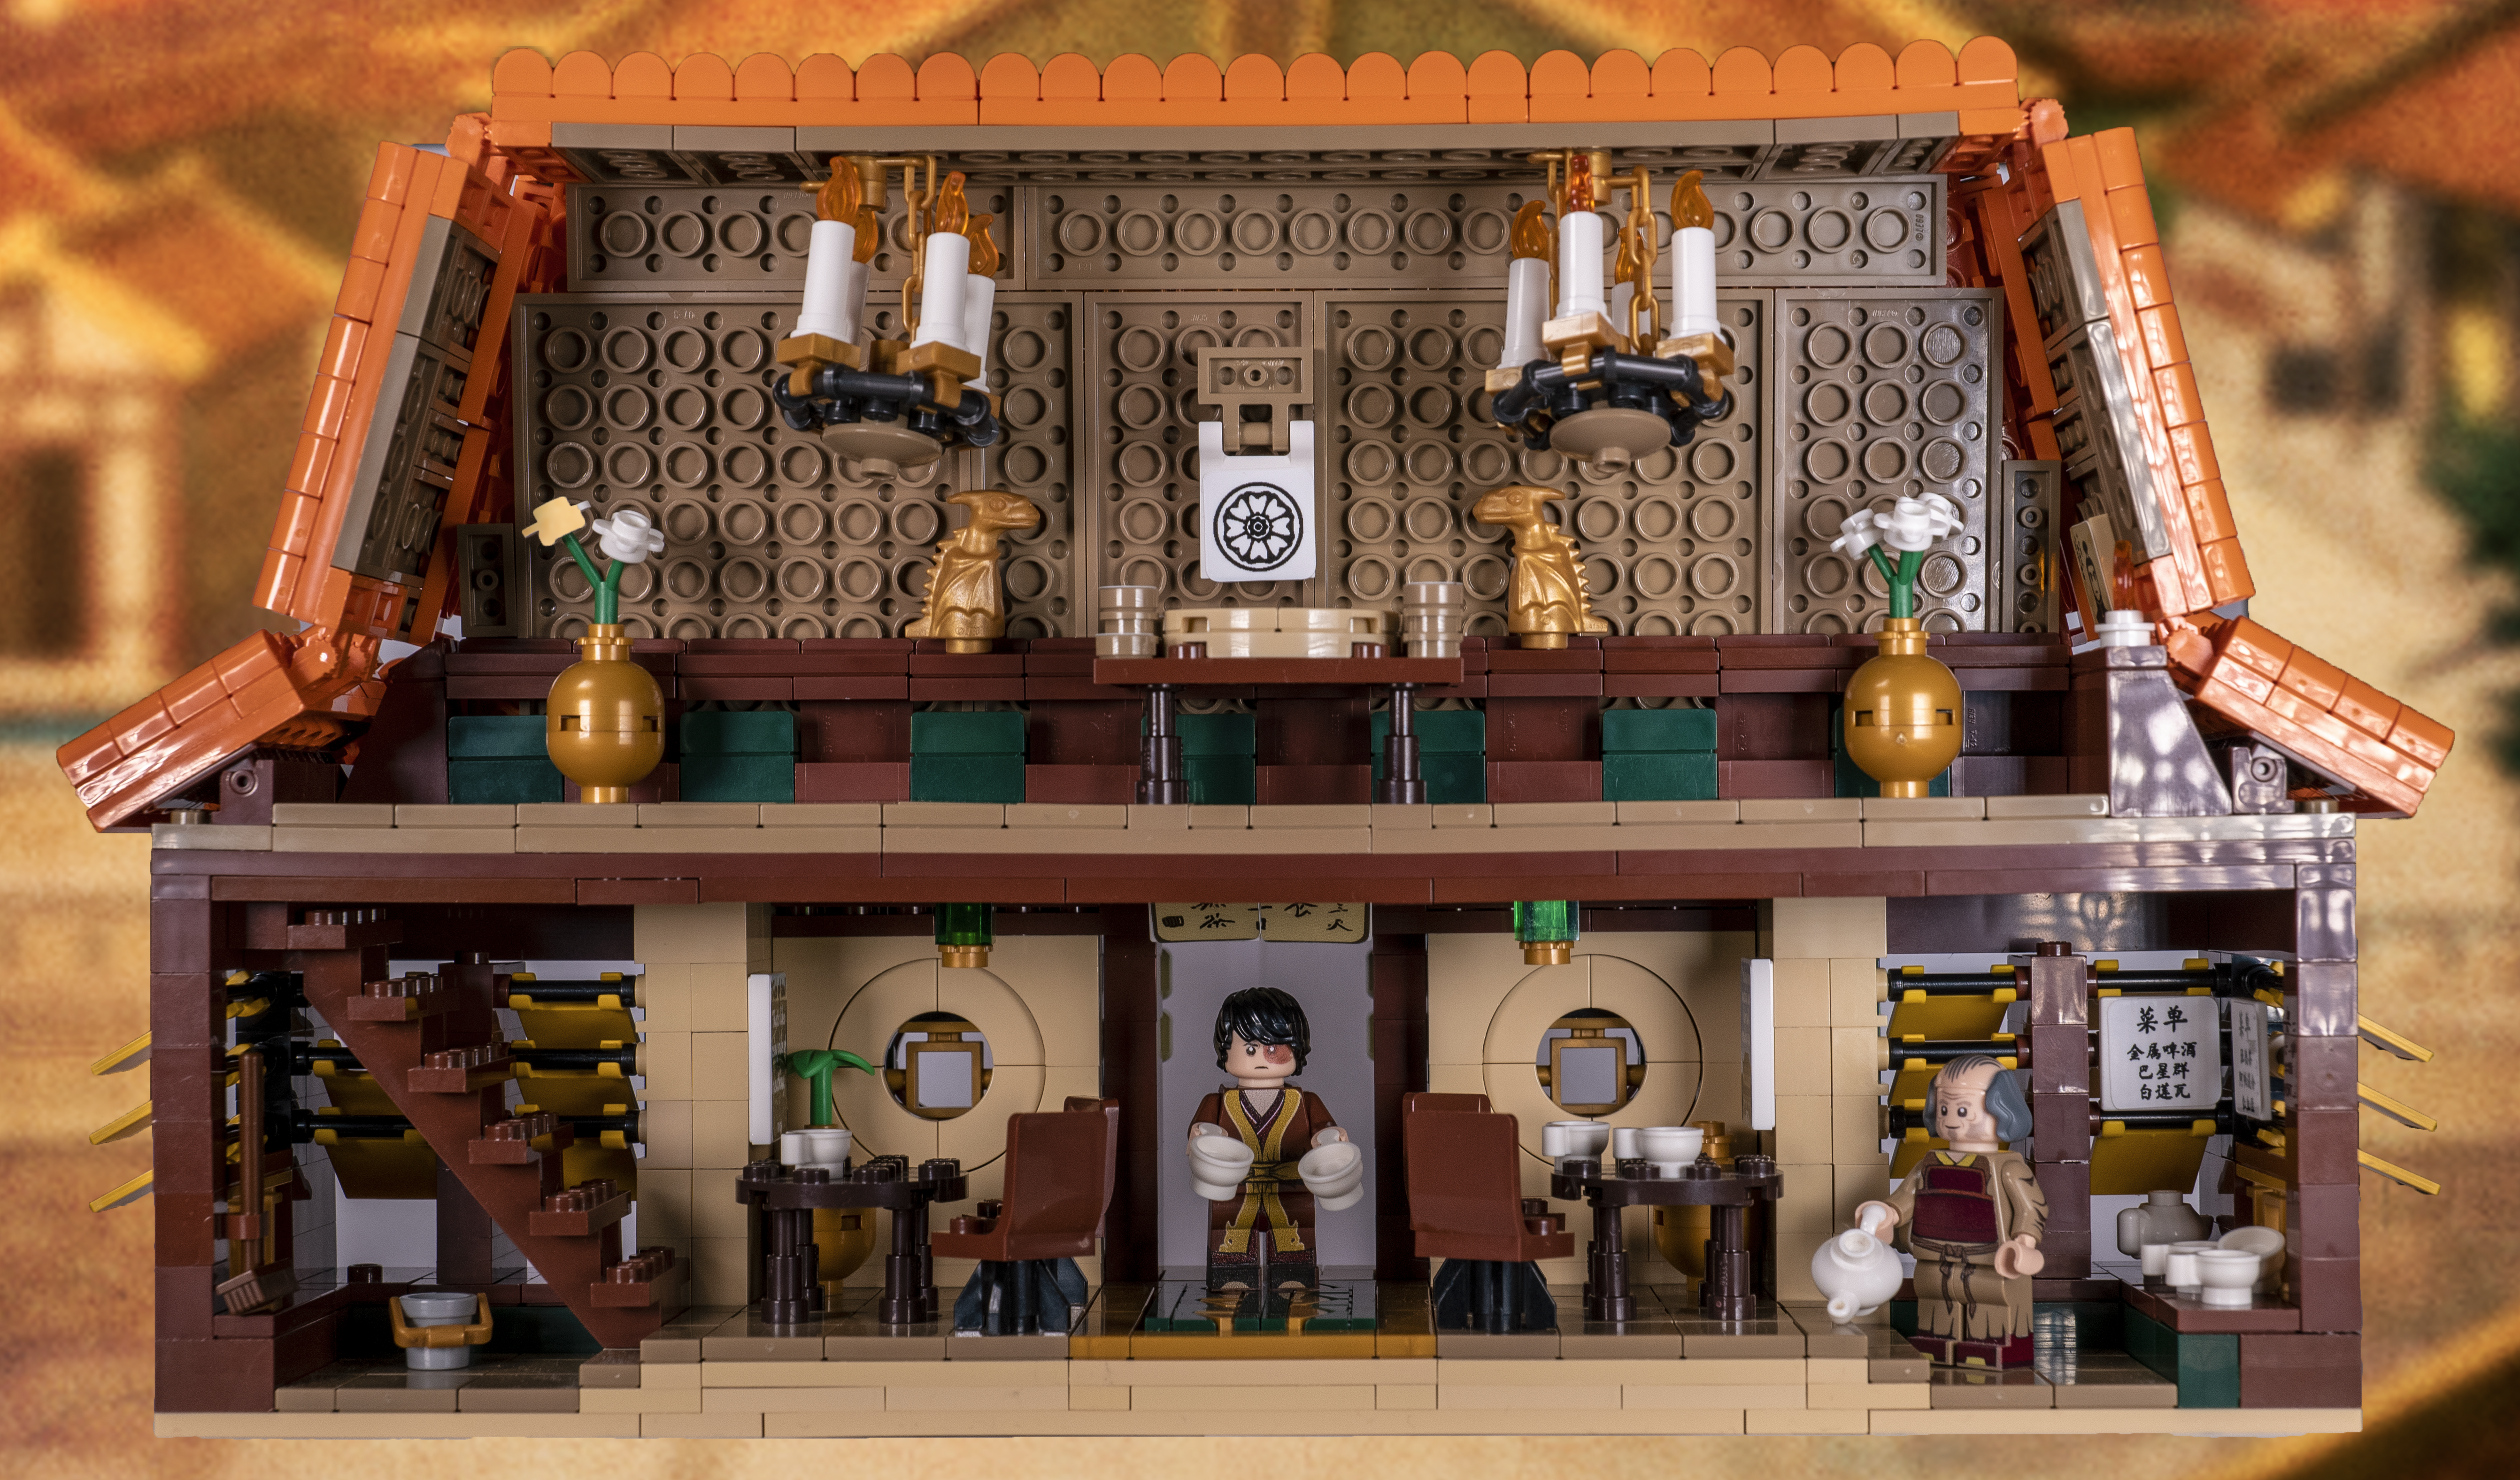 Avatar ATLA Lego Jasmine Dragon Uncle Iroh Tea Shop